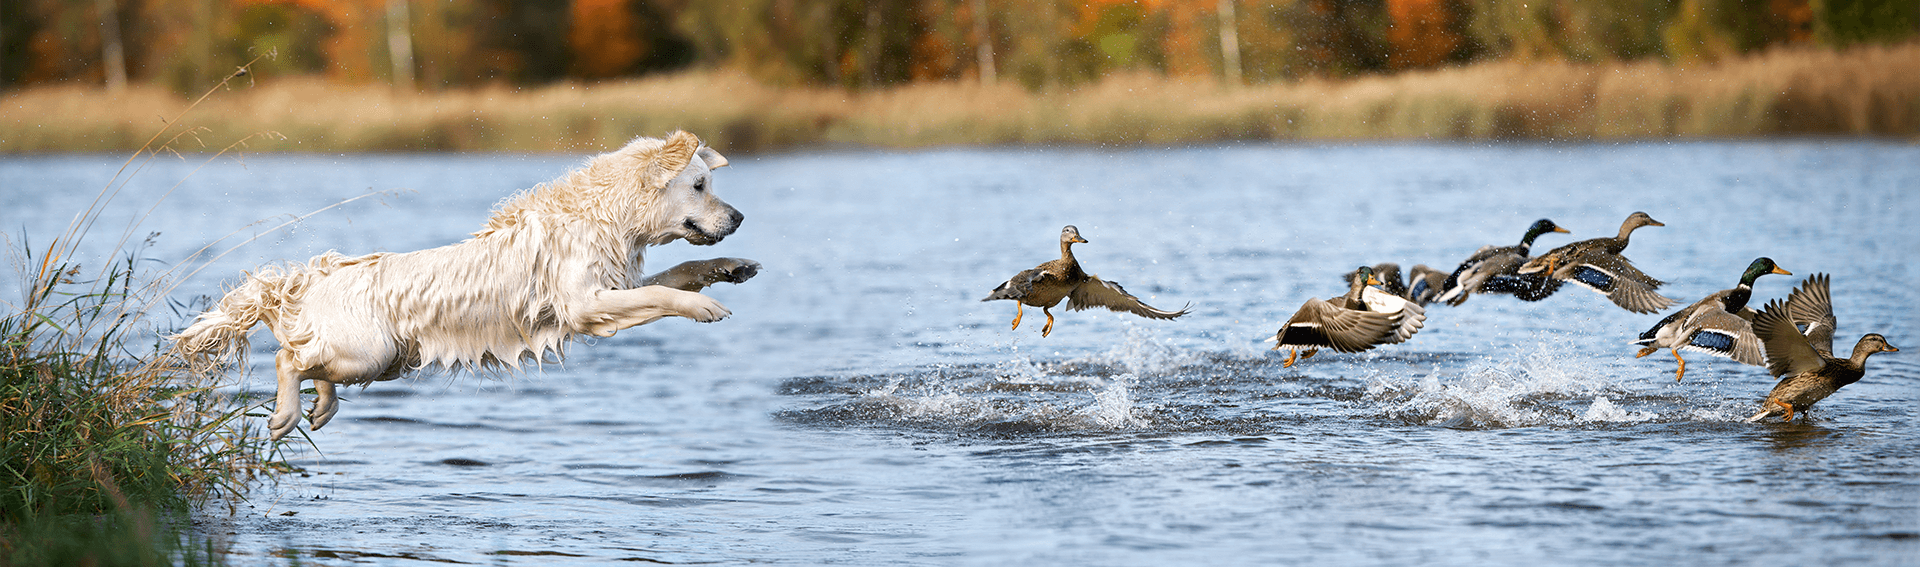 Dog-with-Ducks